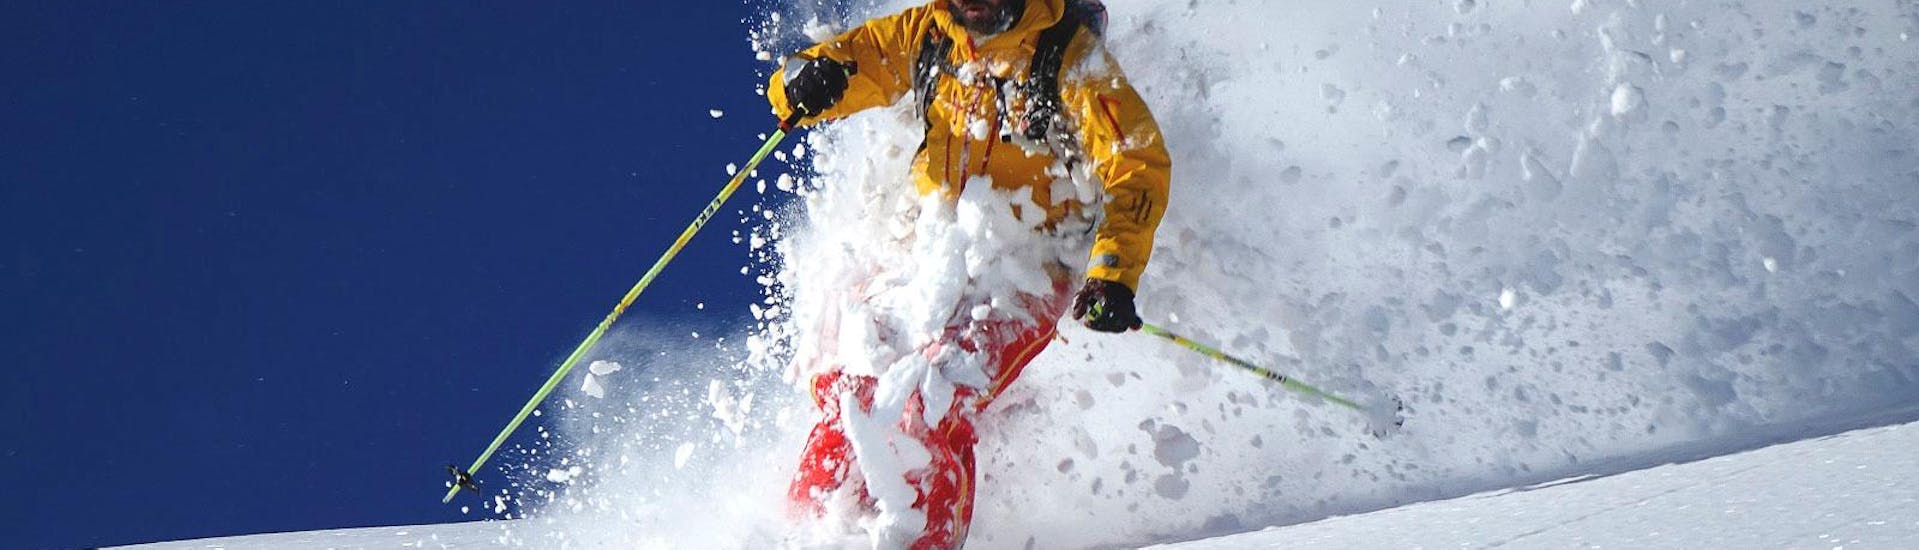 Privé Off-Piste skilessen voor alle niveaus met Snow & Mountain Sports Loitzl Loser.